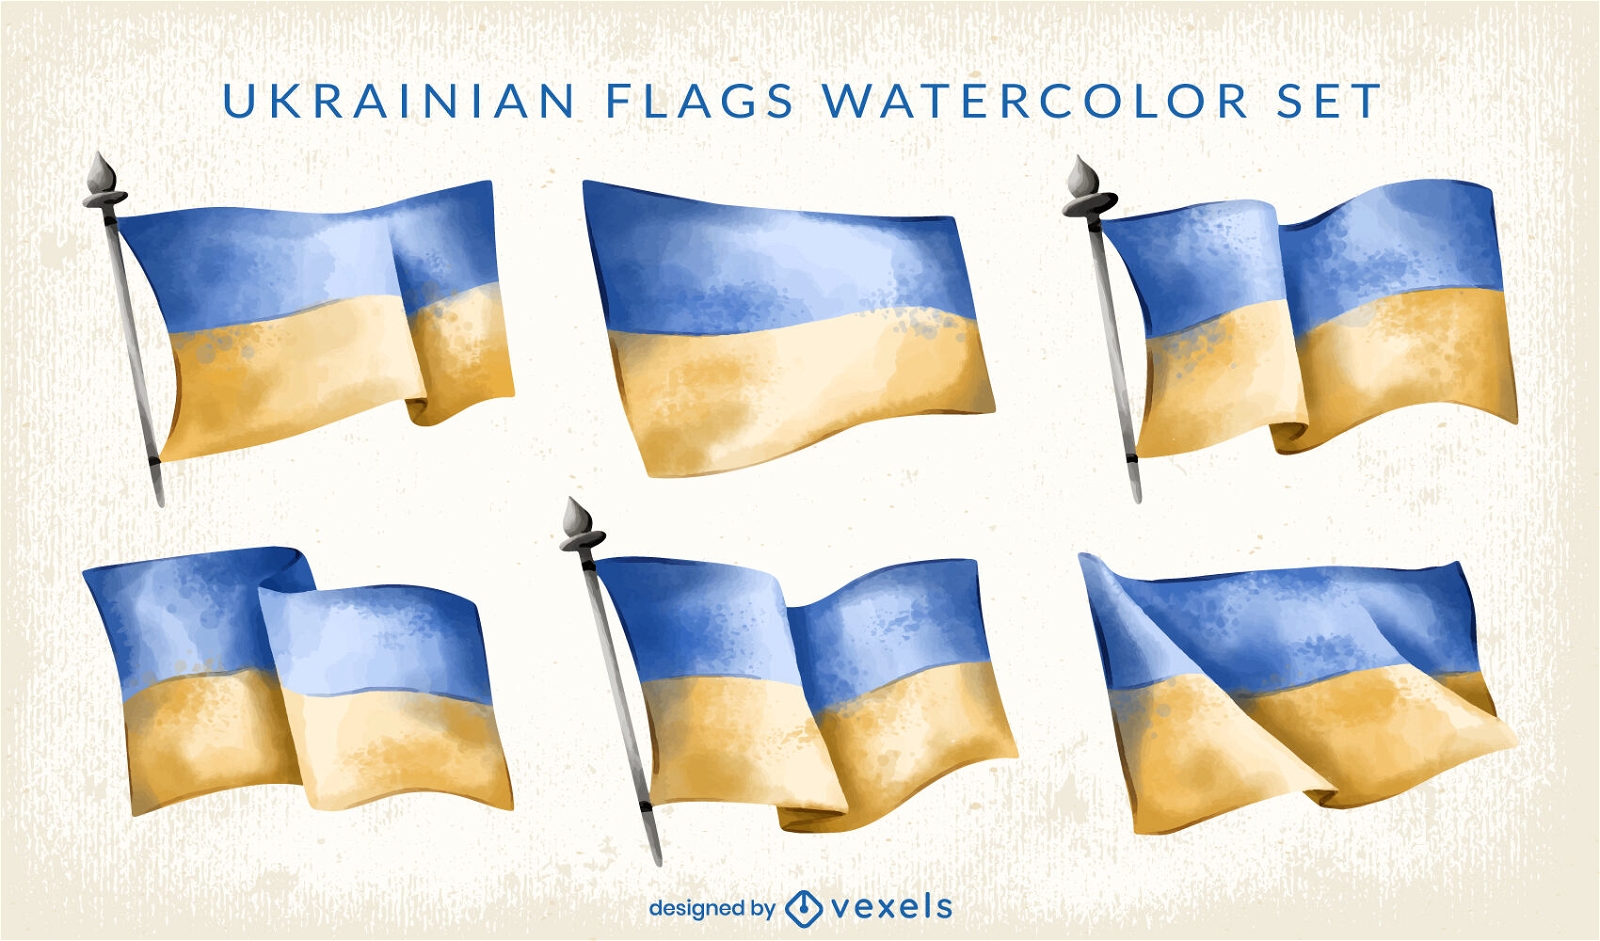 Watercolor Ukrainian flag set